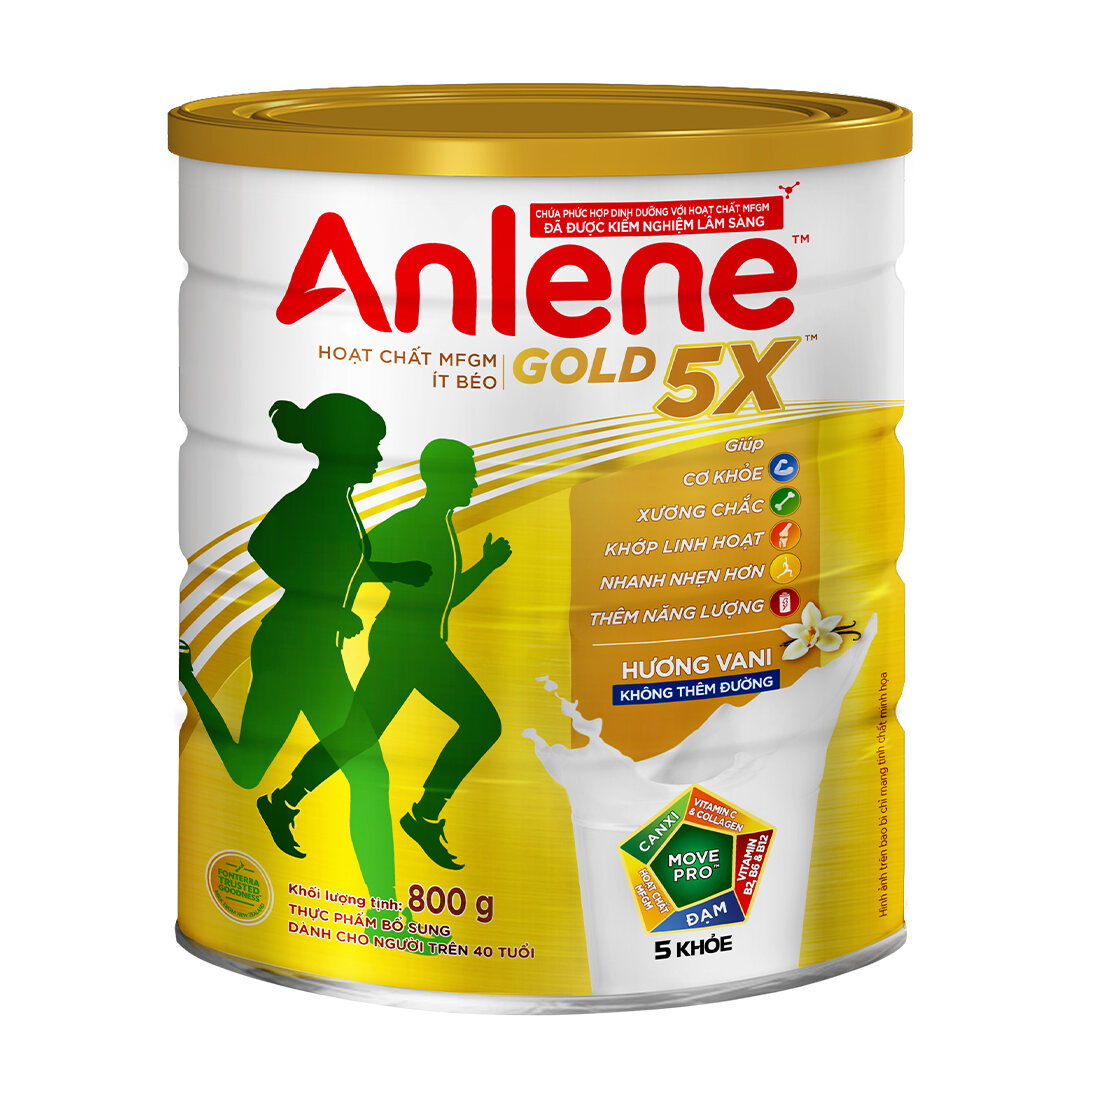 SỮA ANLENE GOLD 5X HƯƠNG VANI